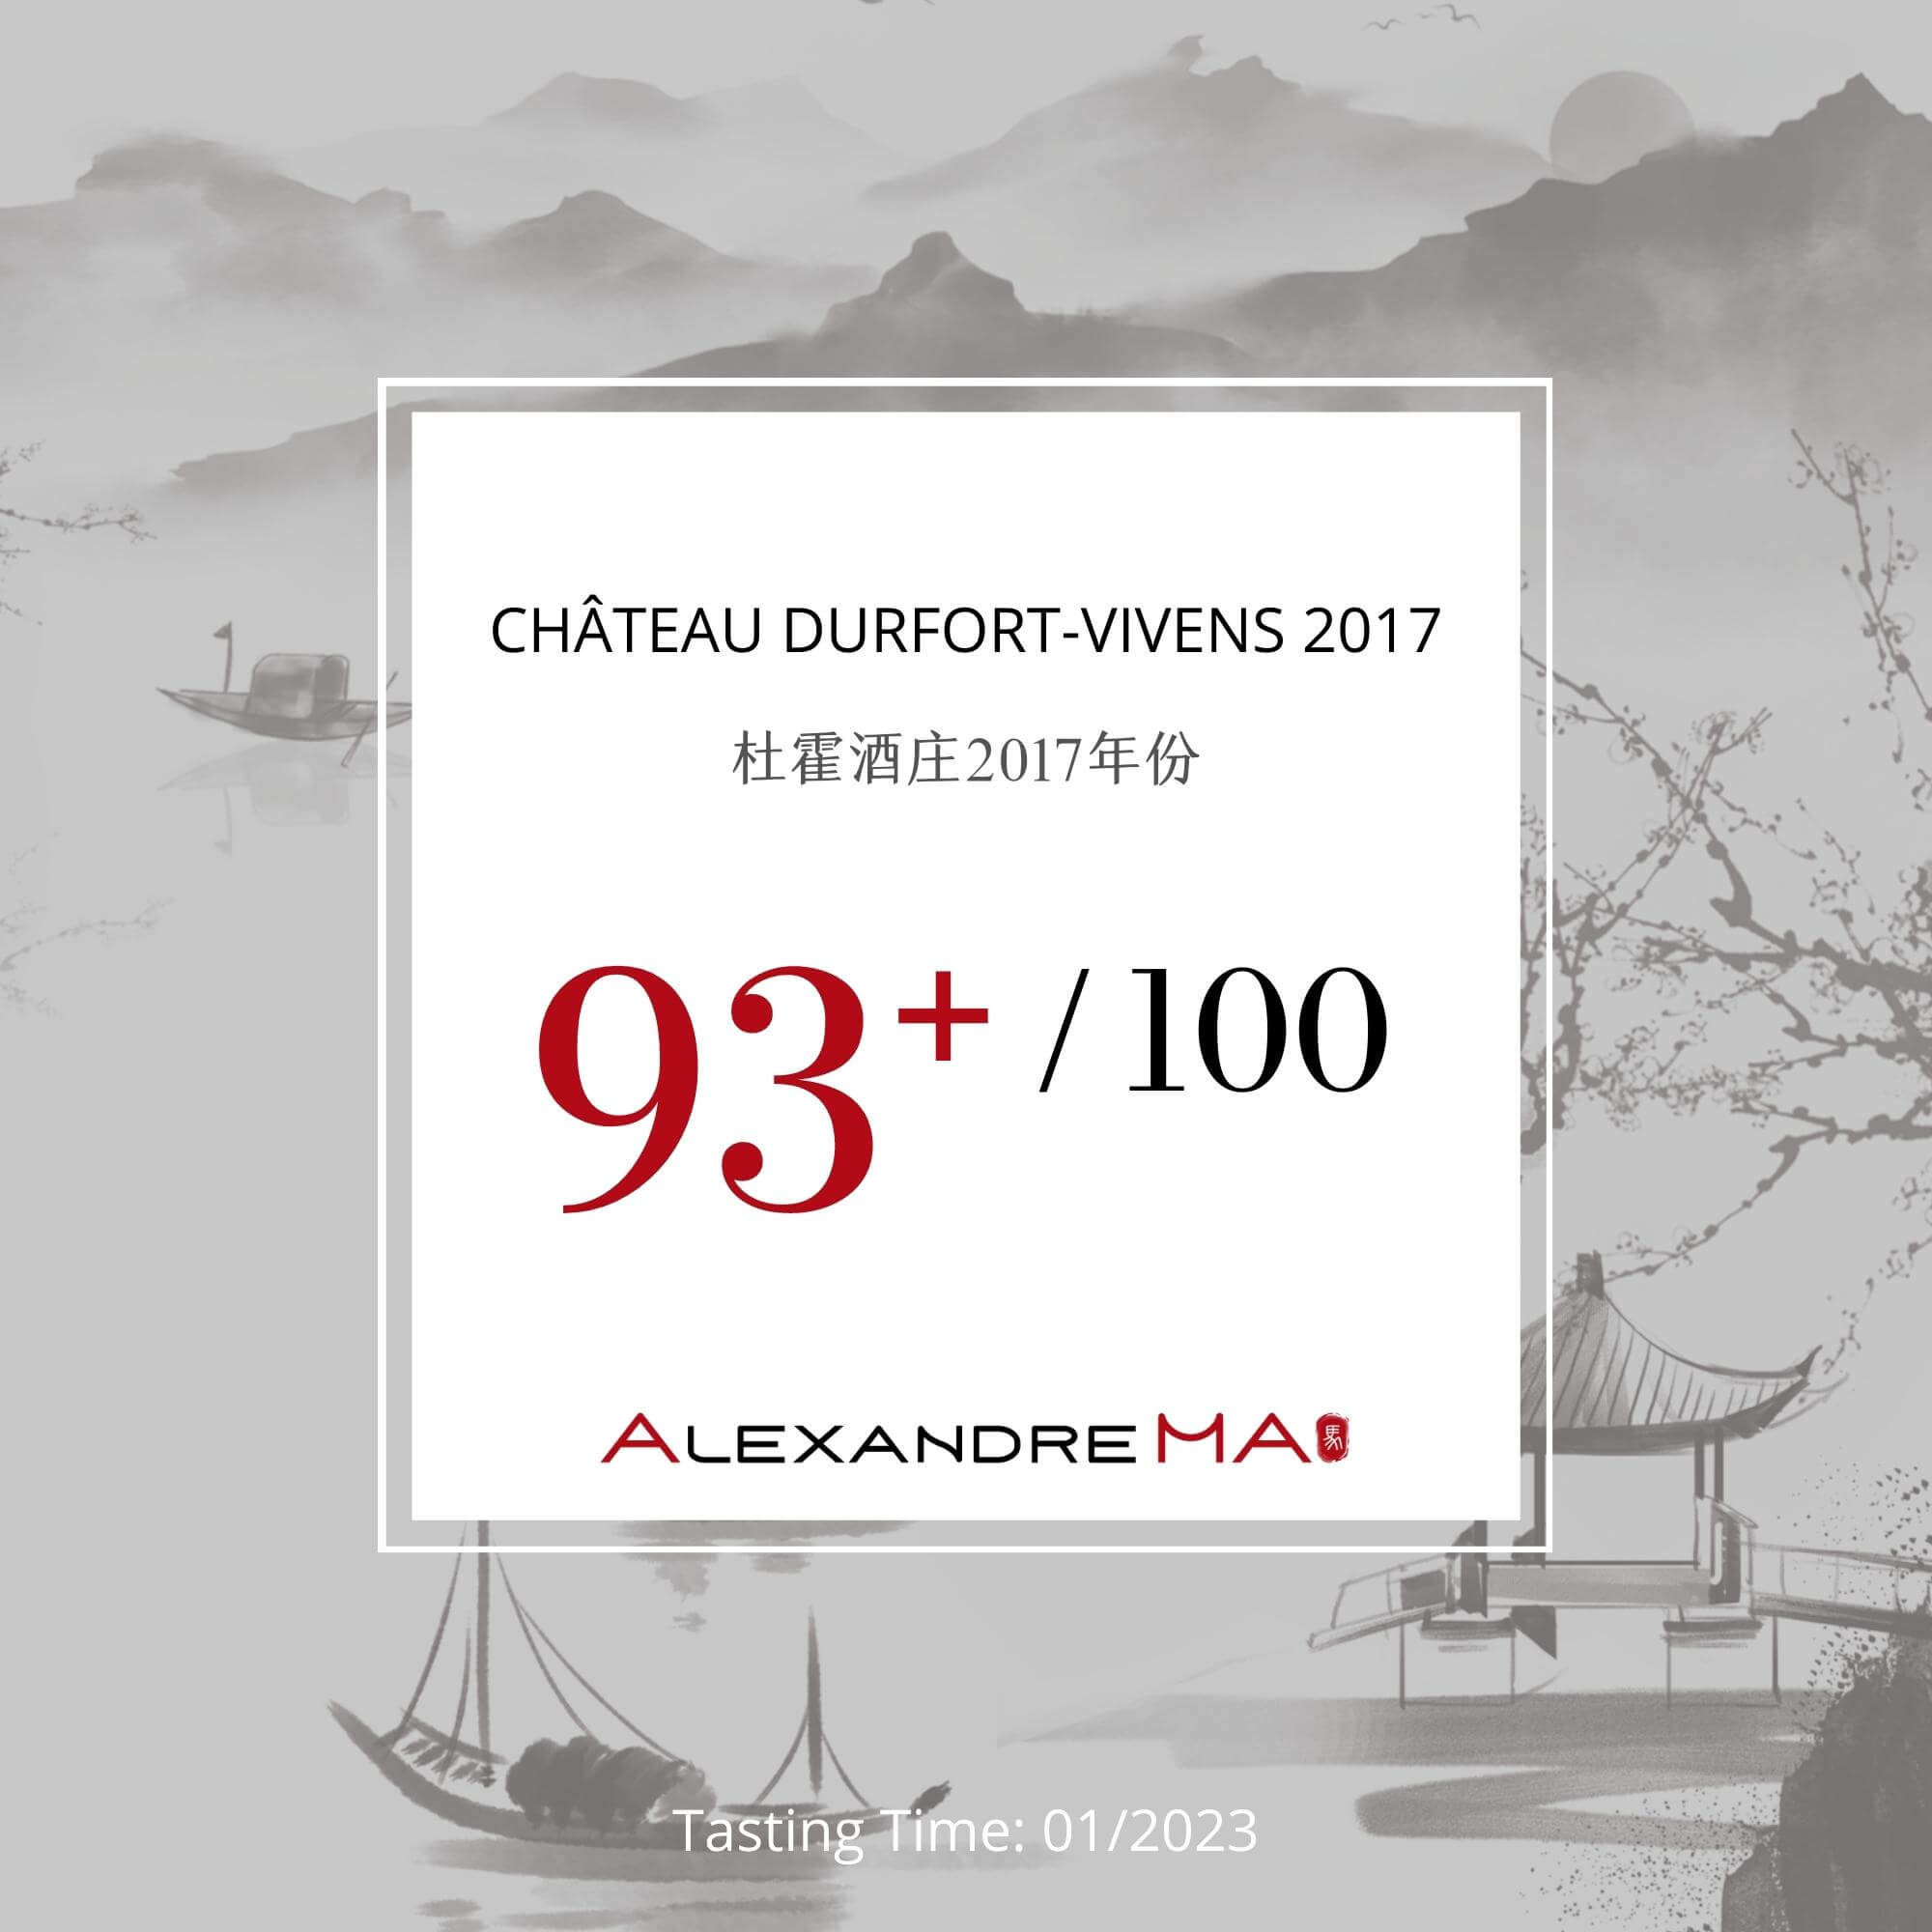 Château Durfort-Vivens 2017 - Alexandre MA